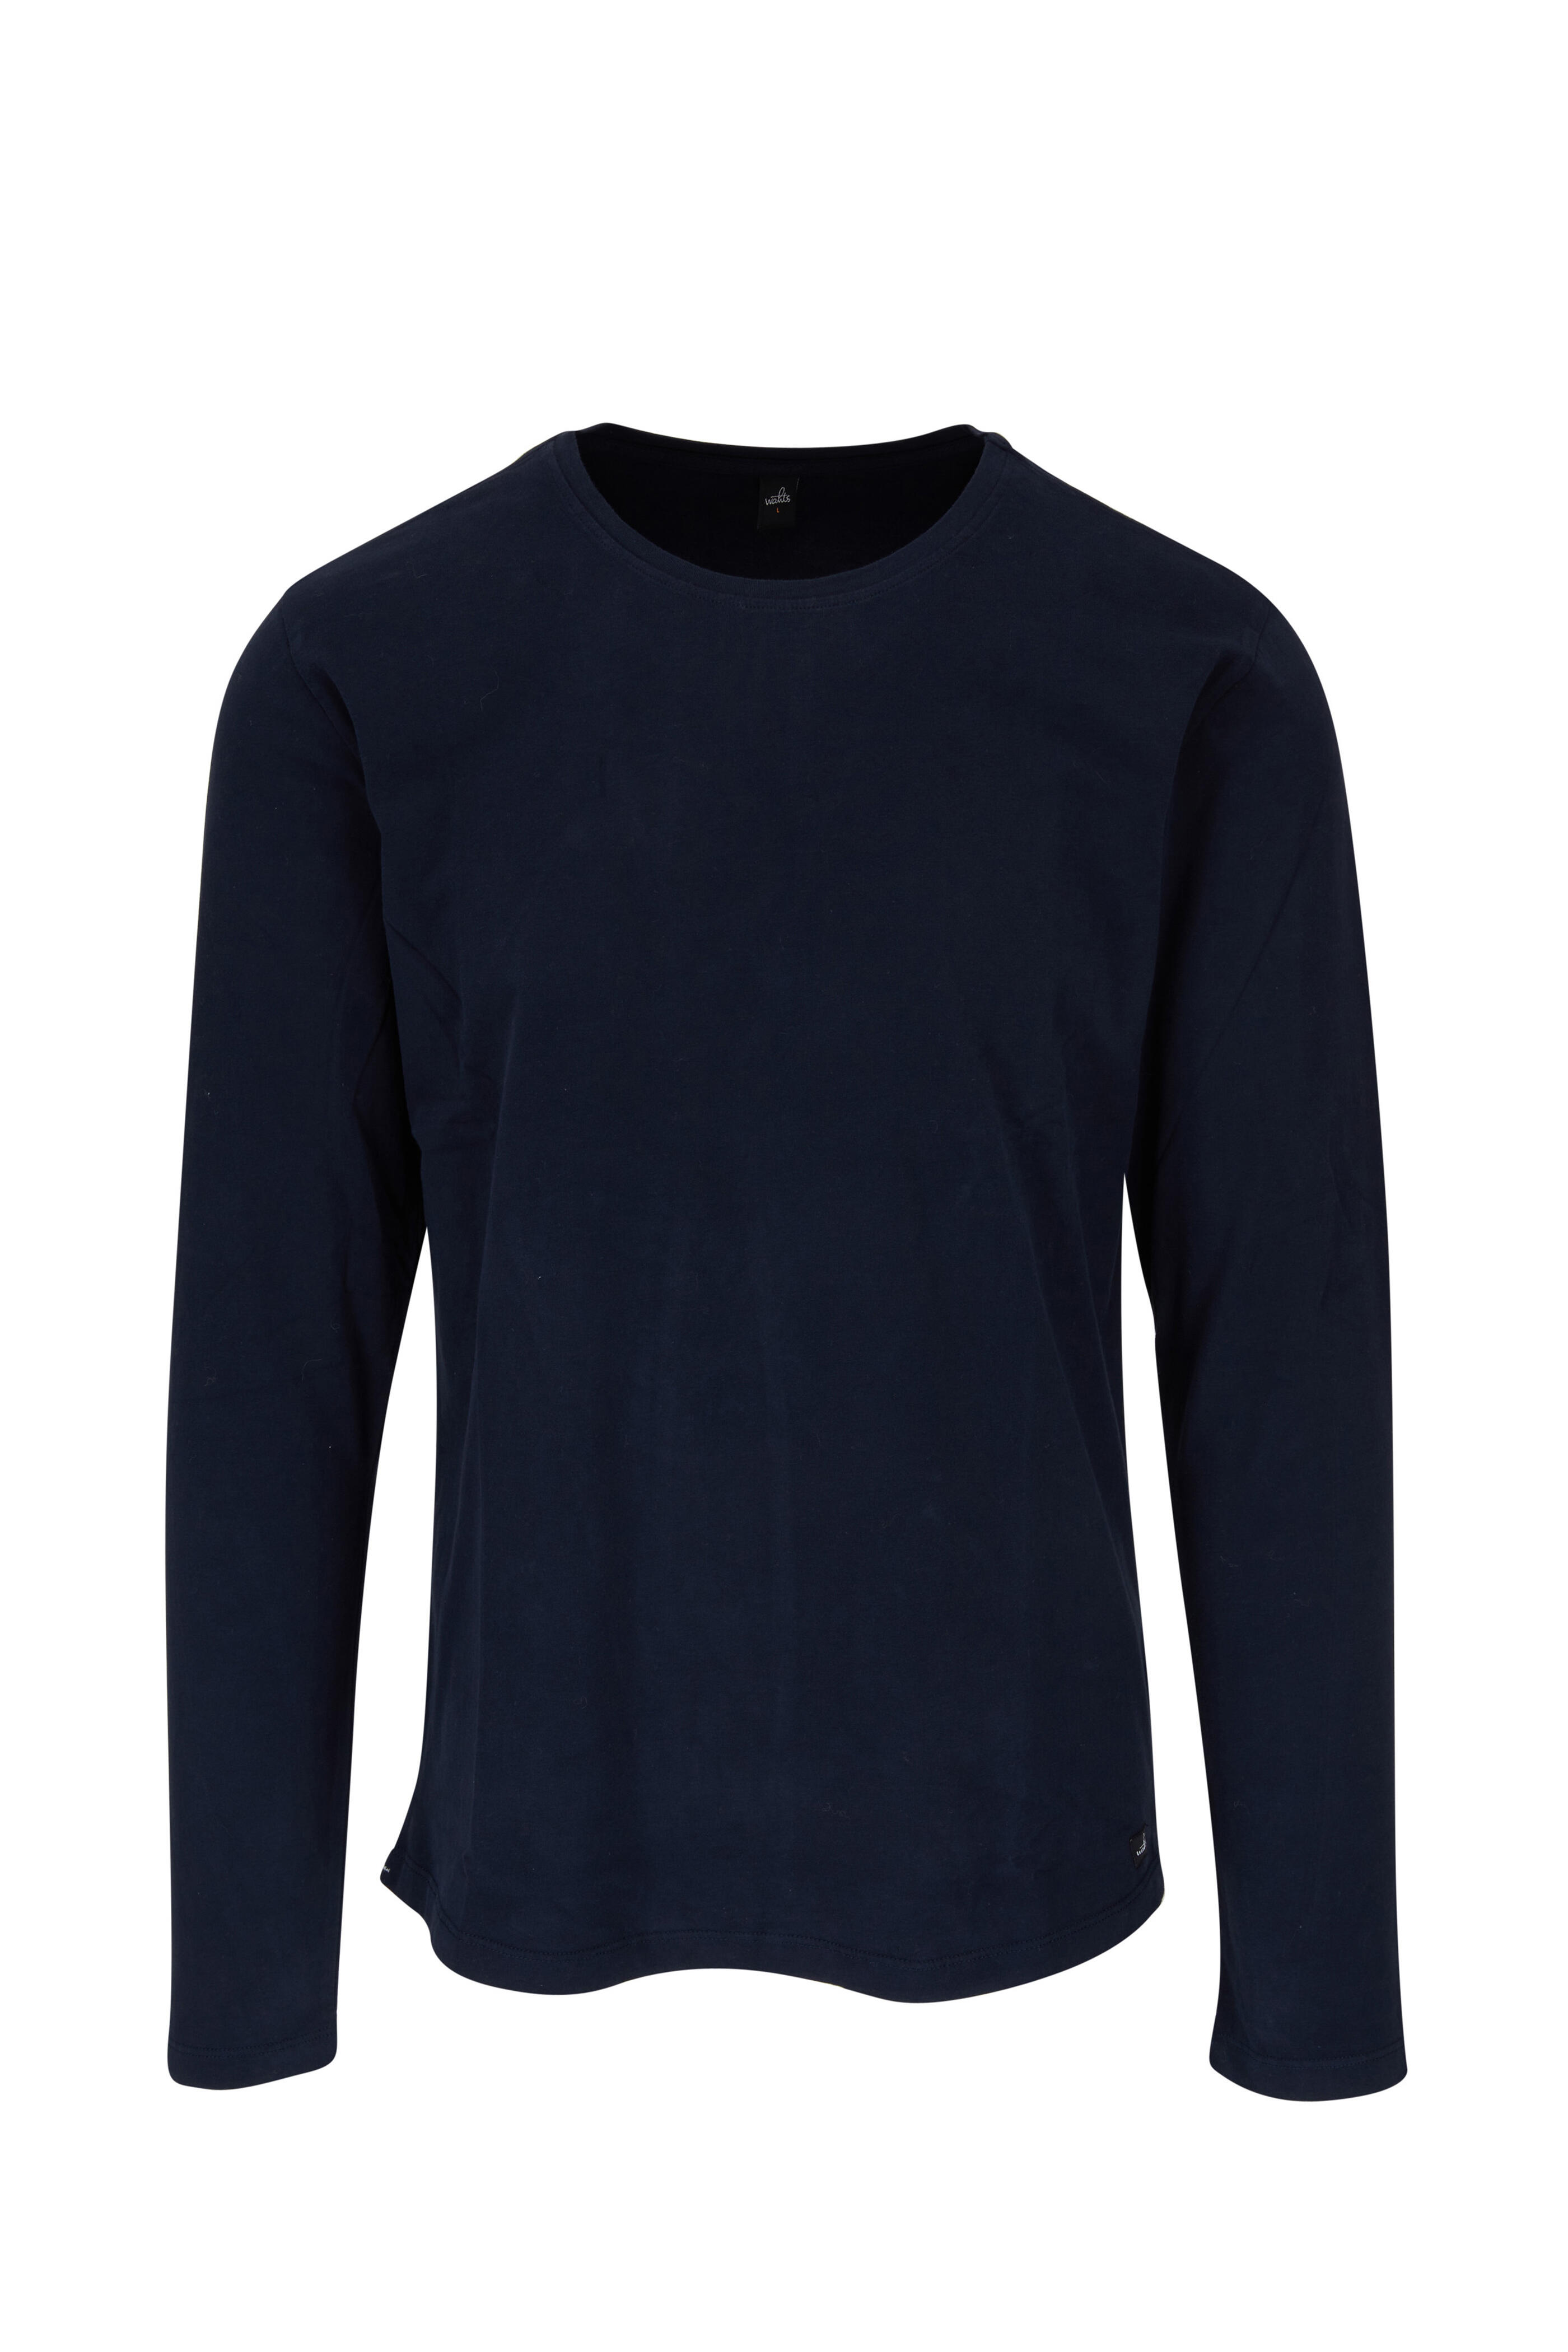 WAHTS - Olson Navy Long Sleeve Crewneck T-Shirt | Mitchell Stores